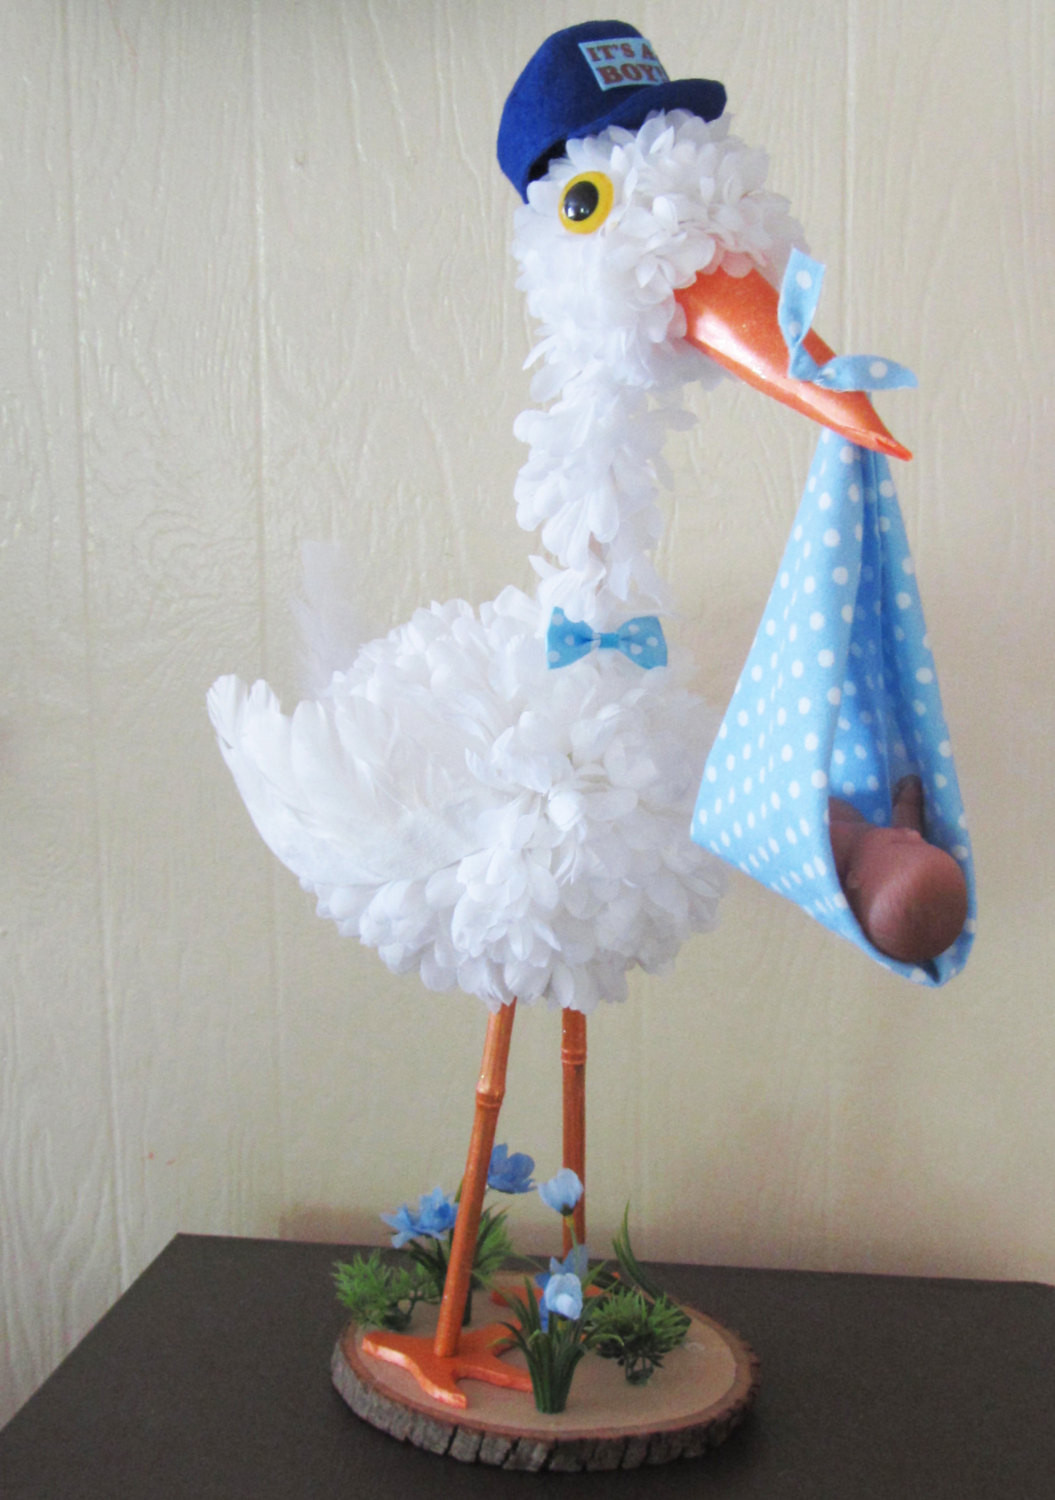 DIY Baby Shower Centerpieces For Boy
 Stork Centerpiece Baby boy stork centerpiece unique baby